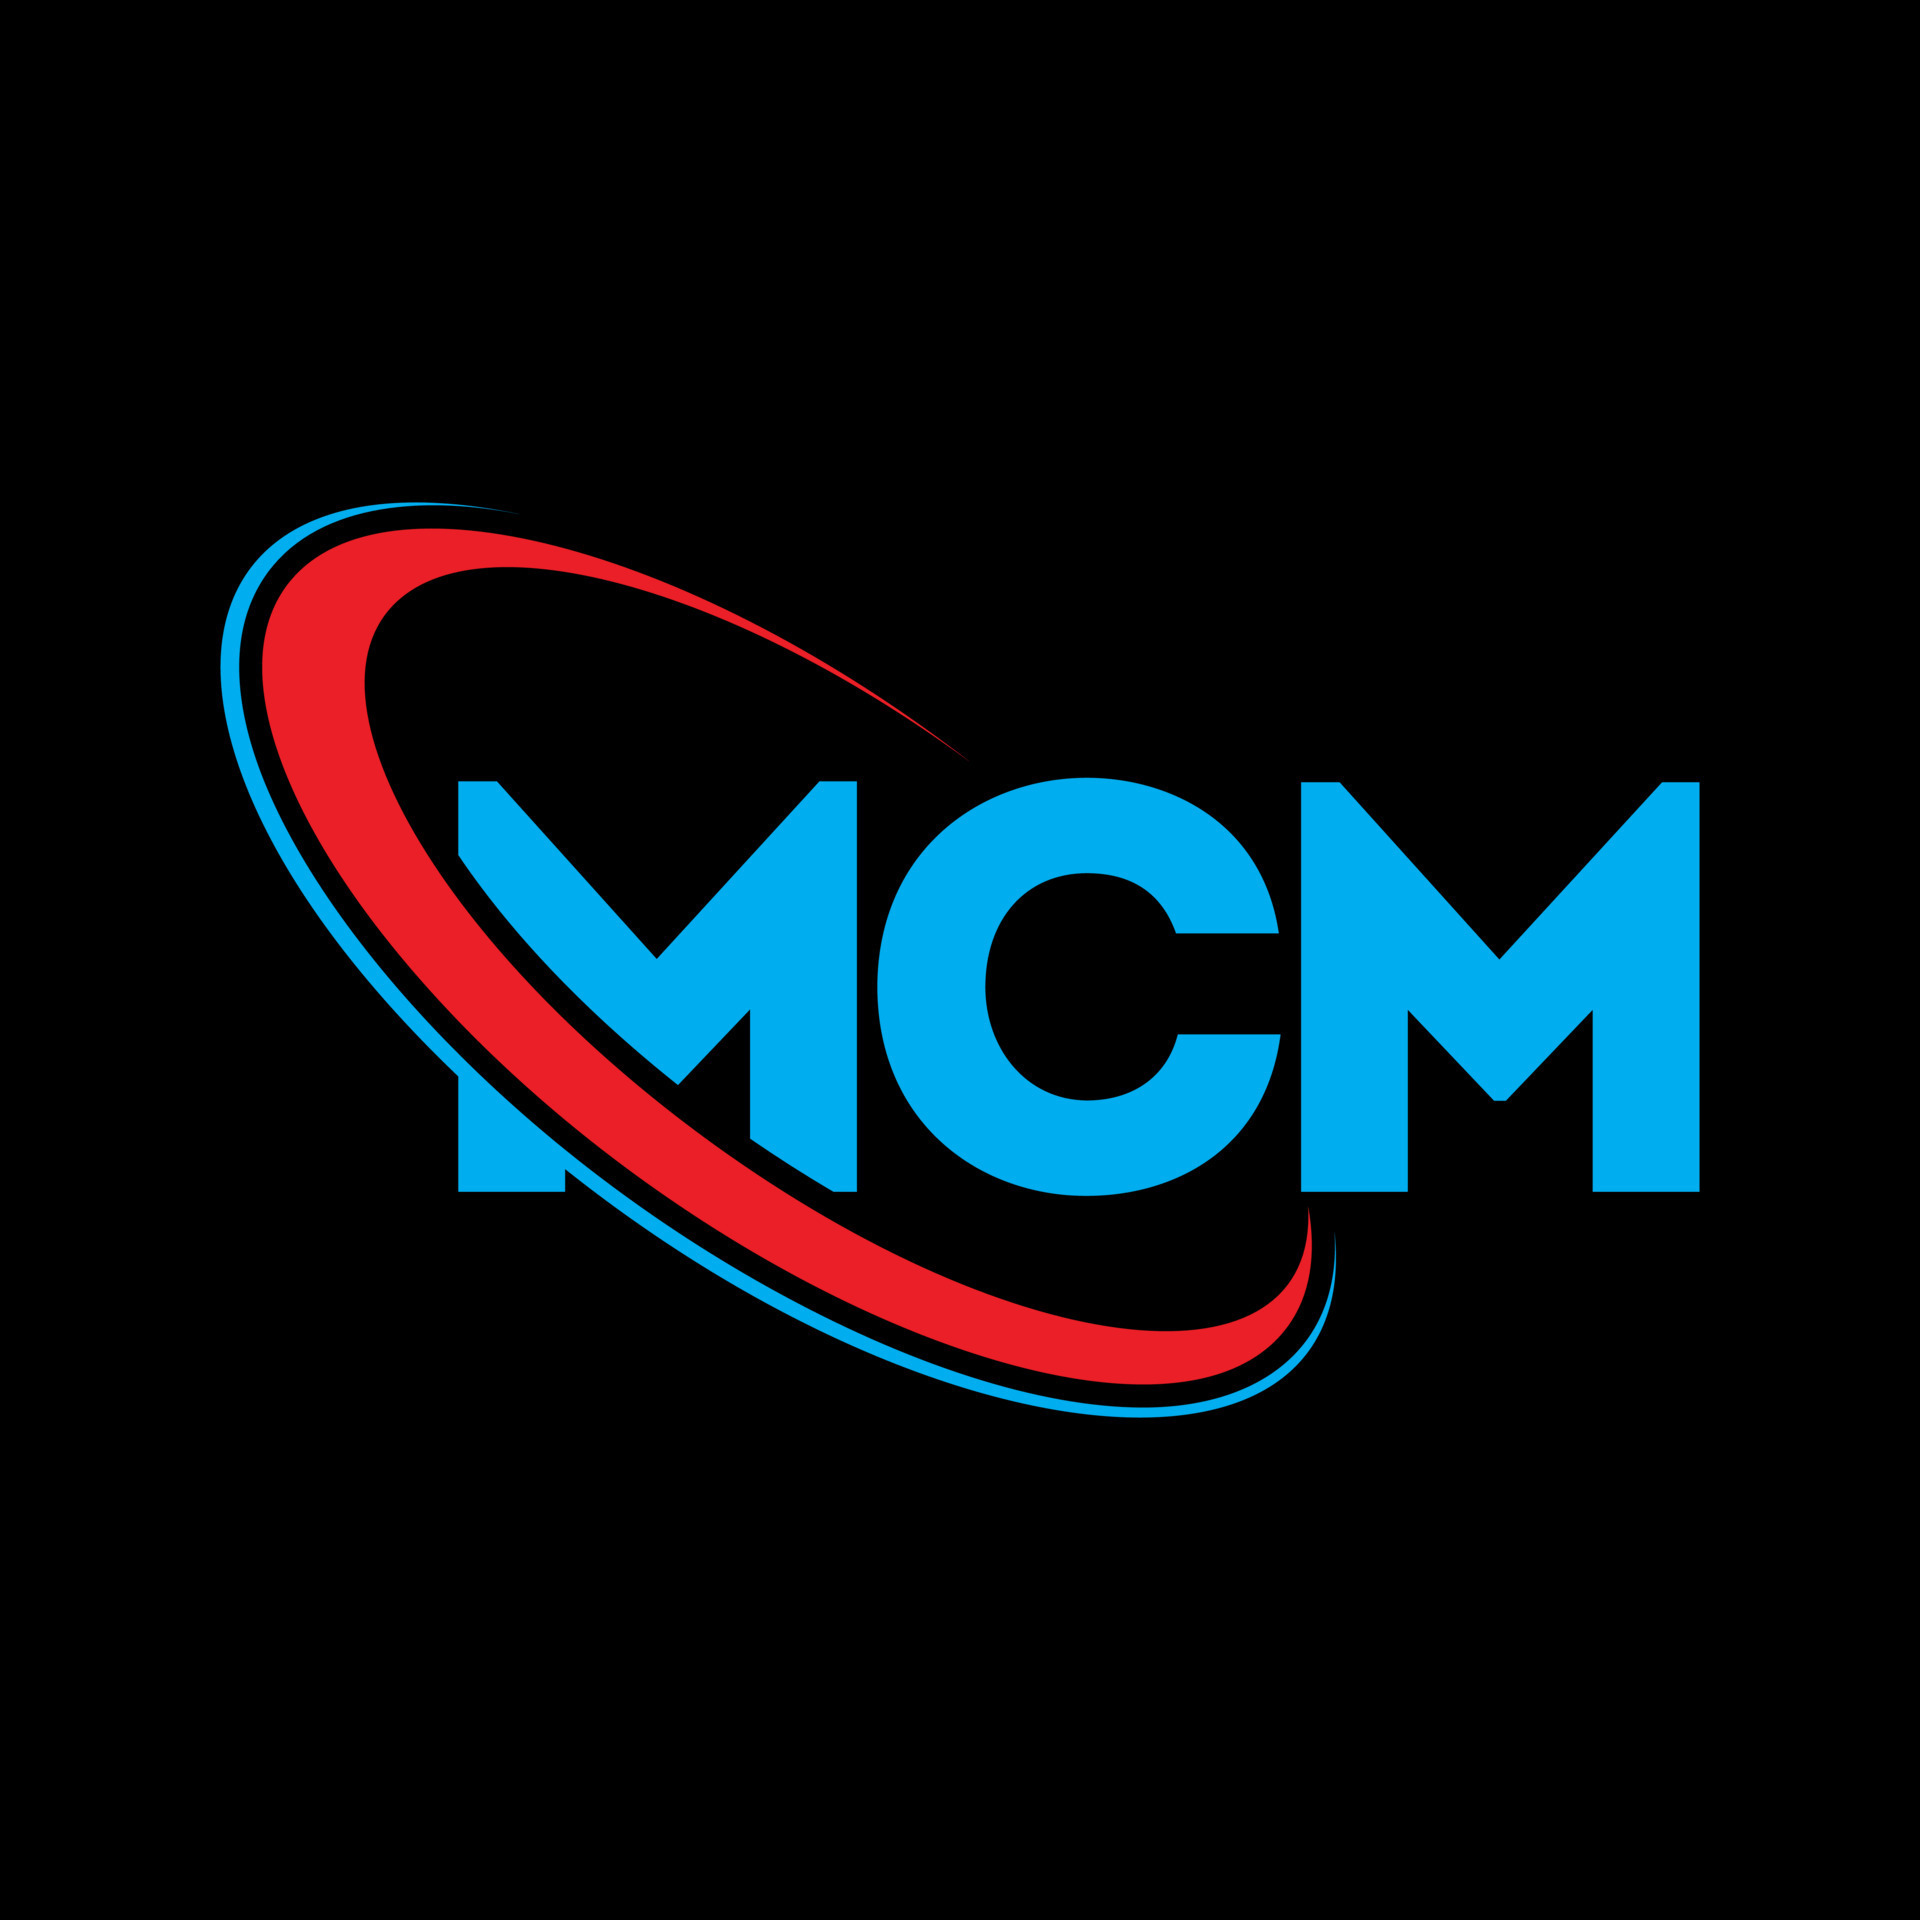 Lexica - Matrix logo design using MCM letters